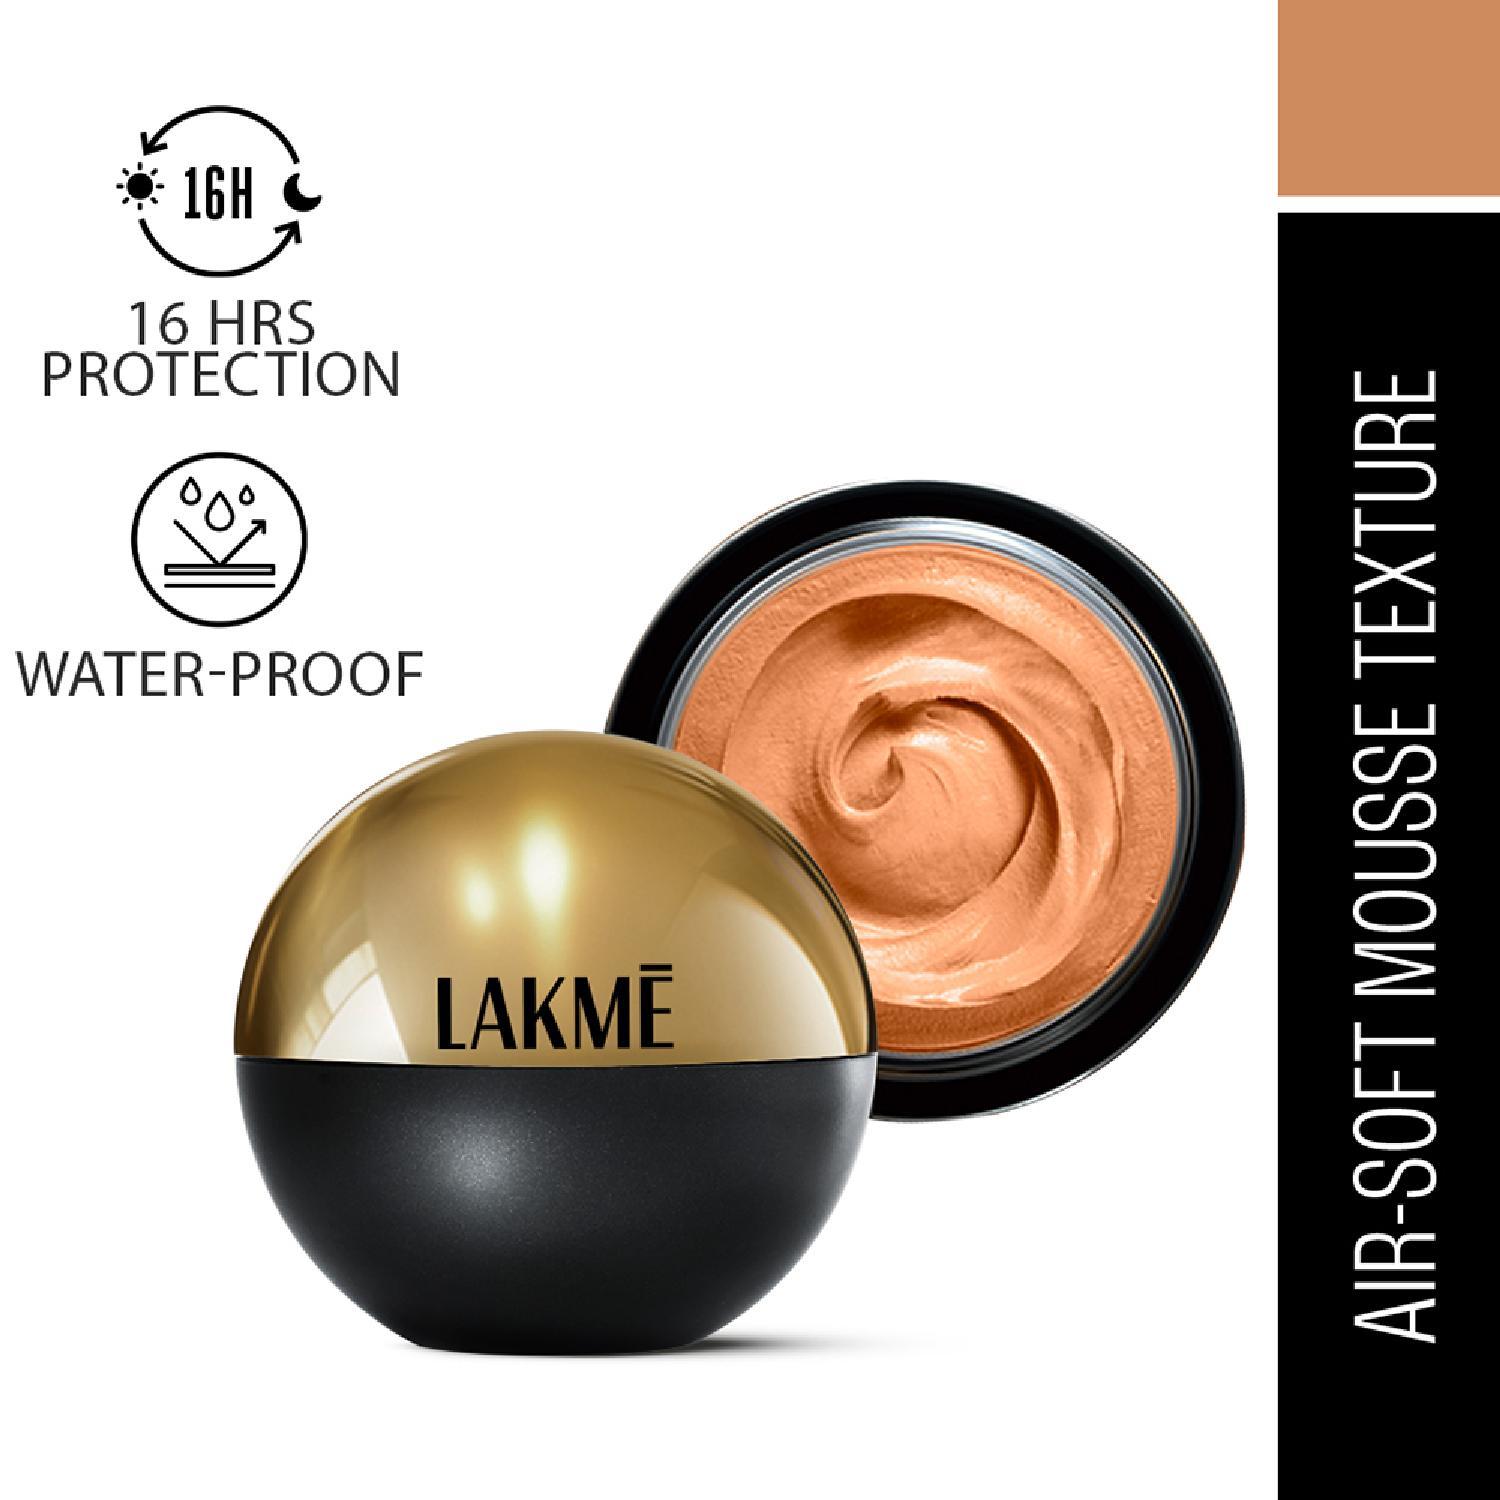 Lakme | Lakme Xtraordin-airy Mattereal Mousse Foundation, 03 Golden Sand (25 g)